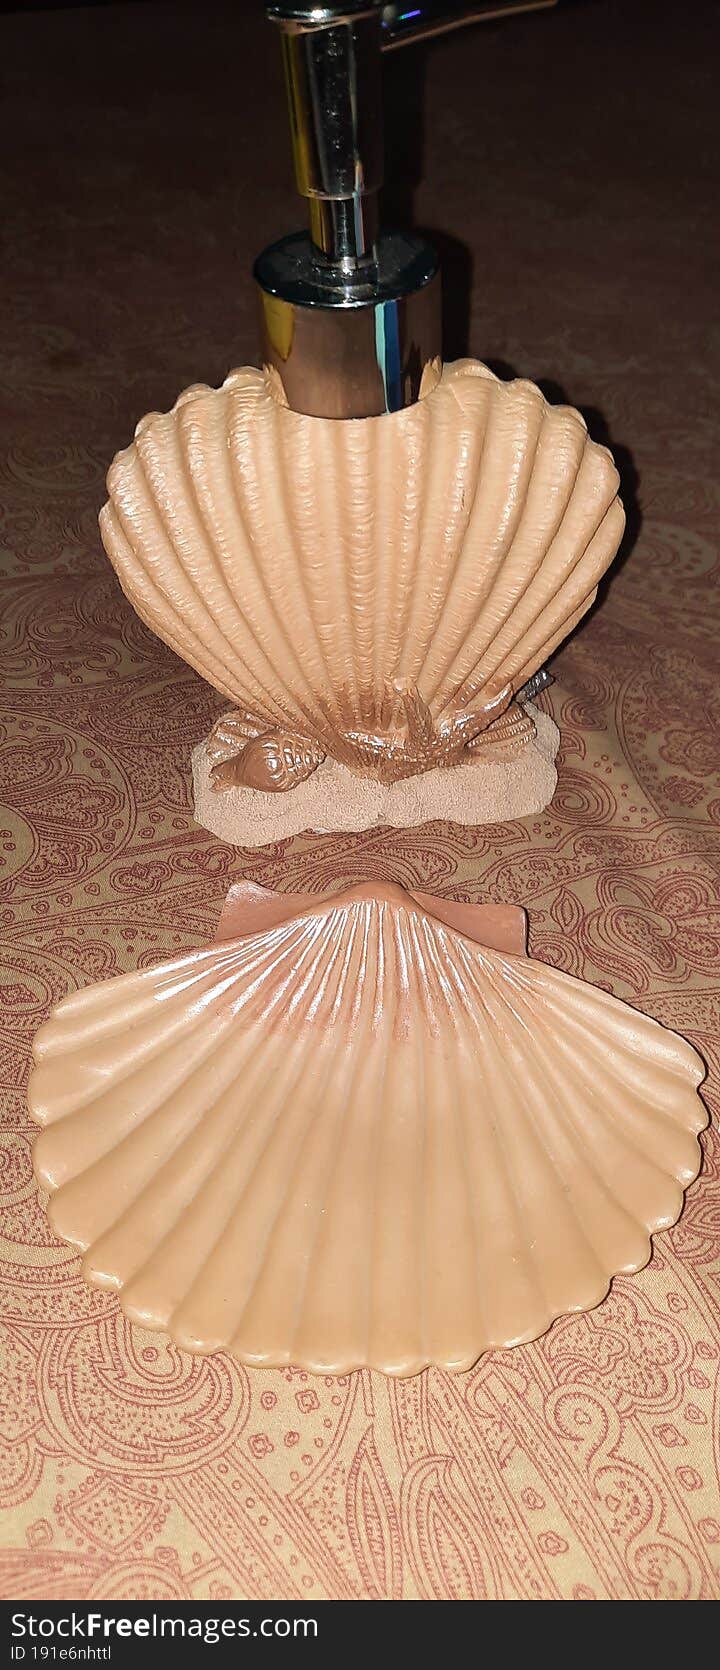 Shell shape bottle and shell shape soap dish